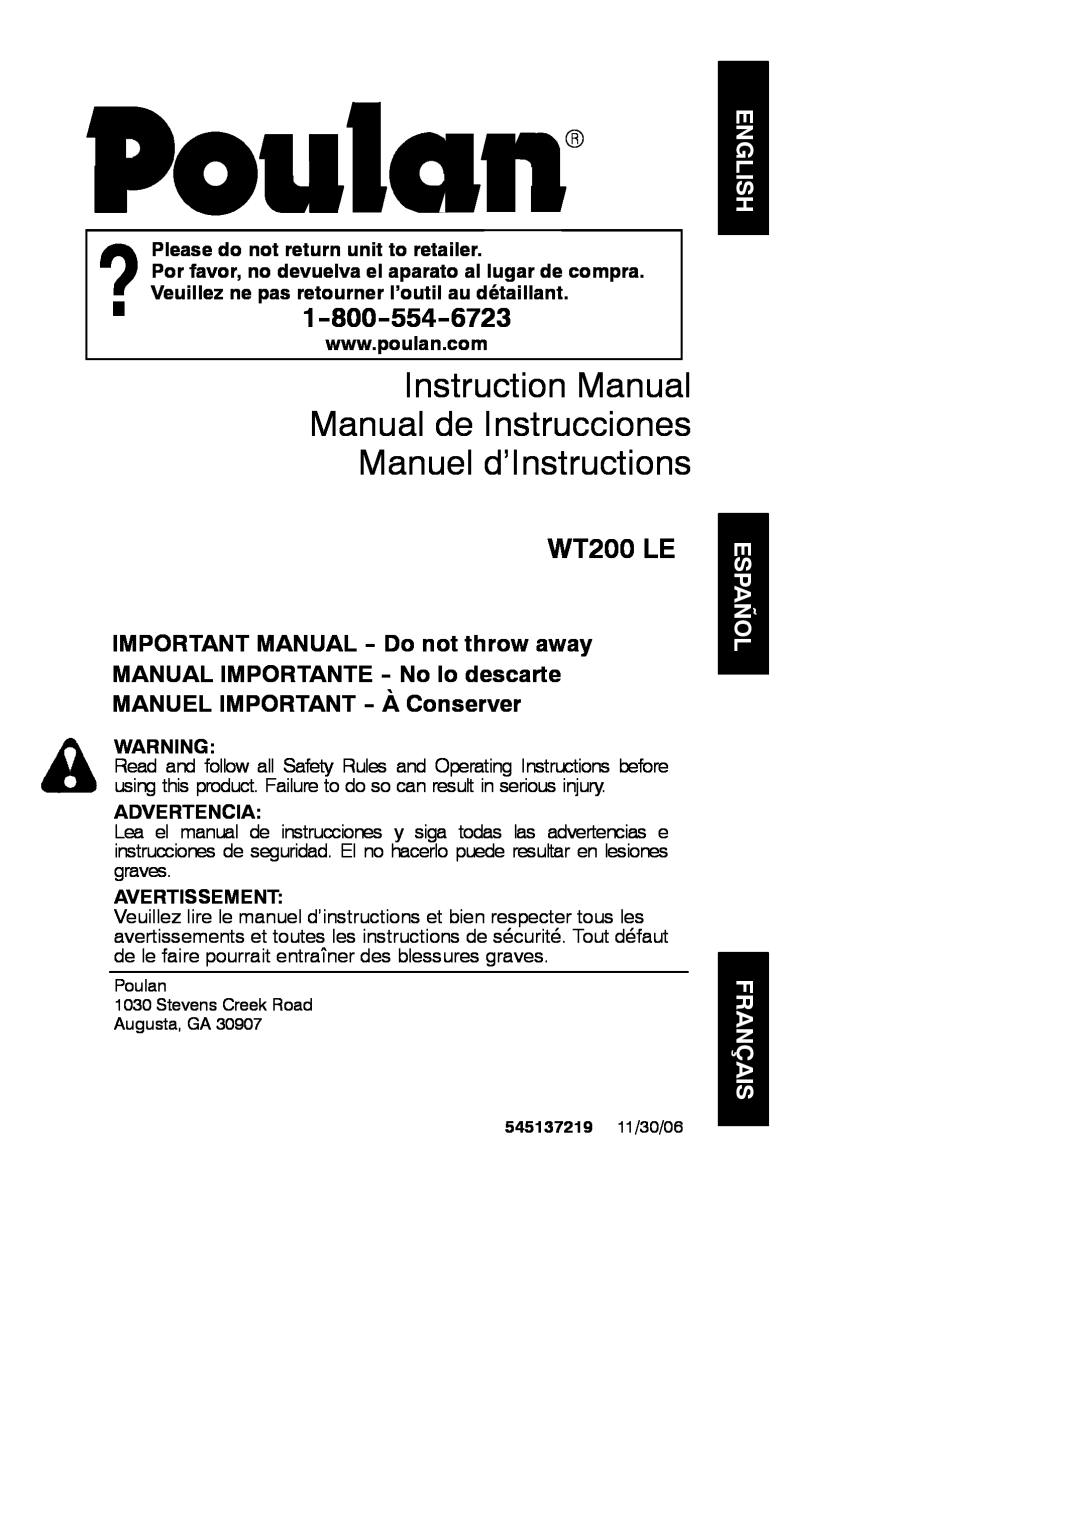 Poulan WT200 LE instruction manual English Español Français, Please do not return unit to retailer, Advertencia 